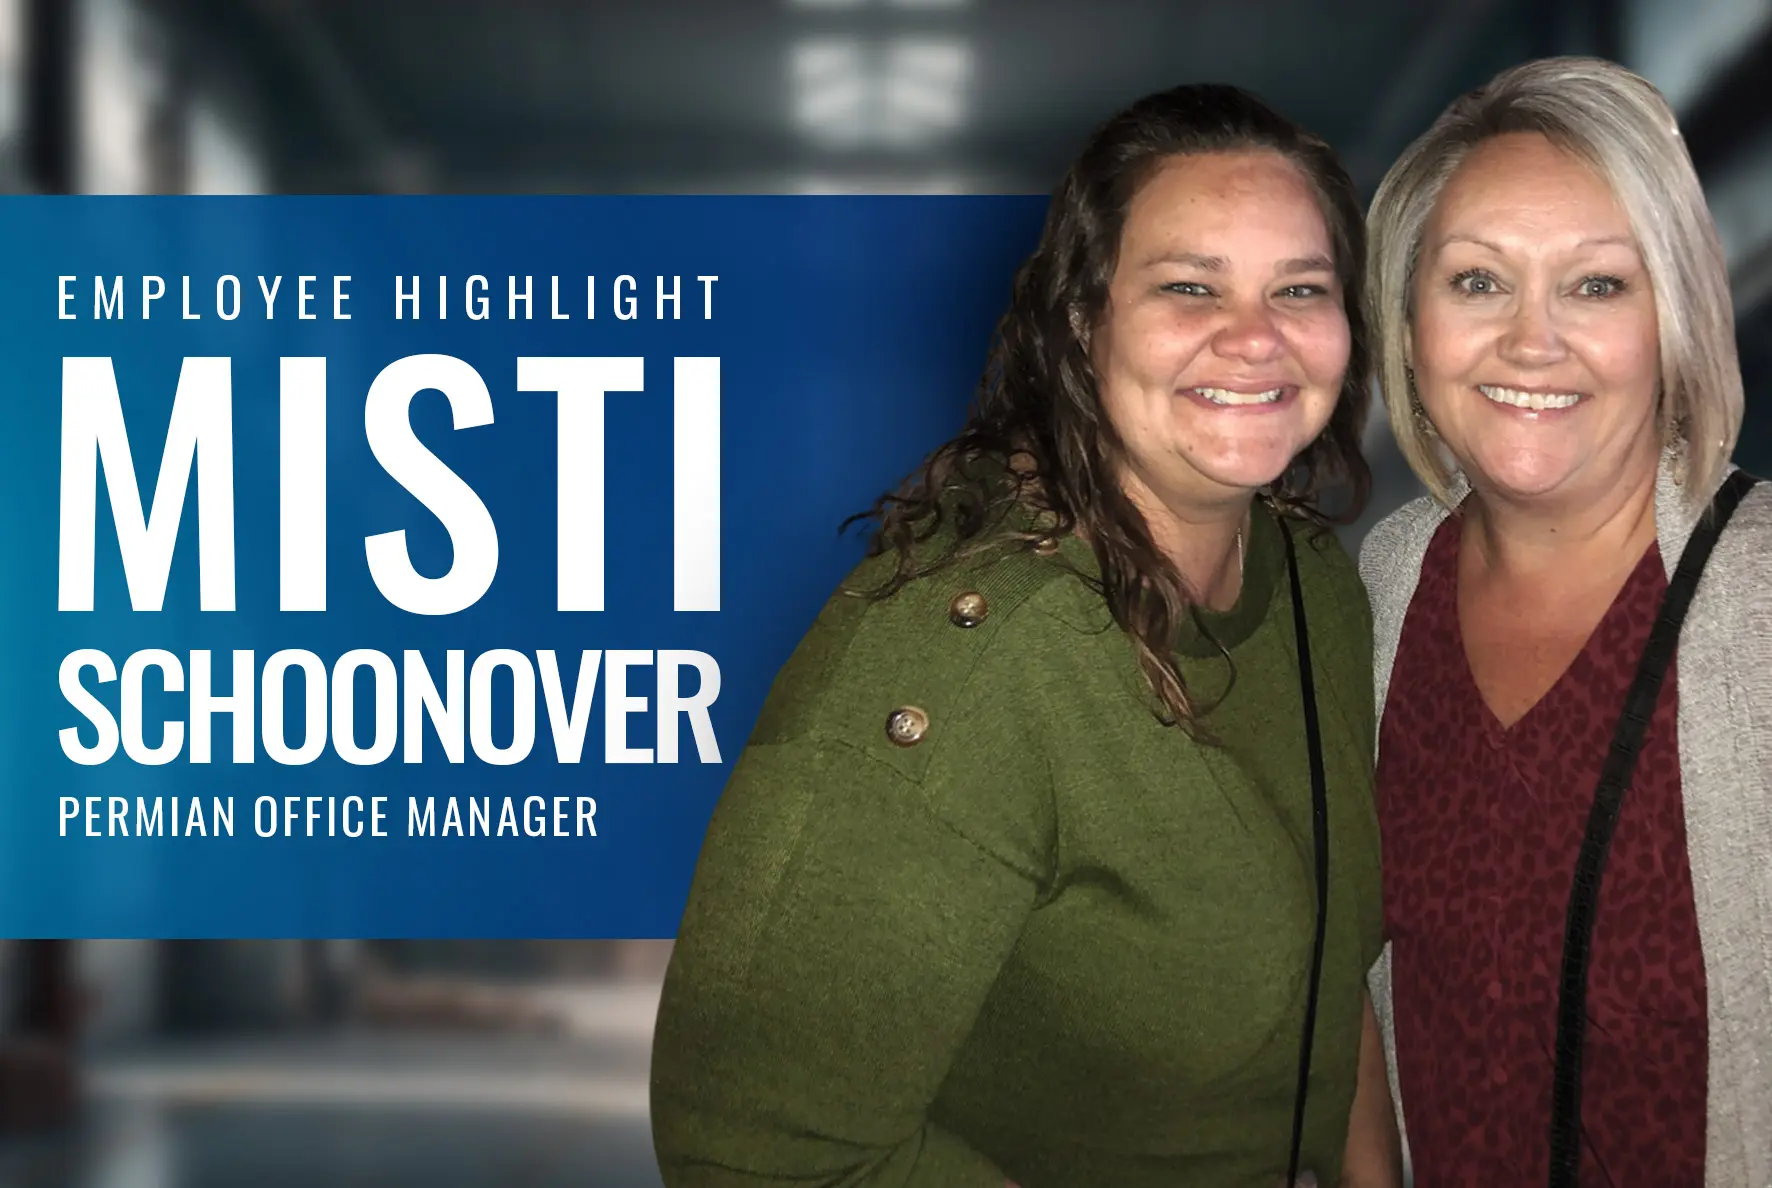 Misti Schoonover, employee highlight, staff